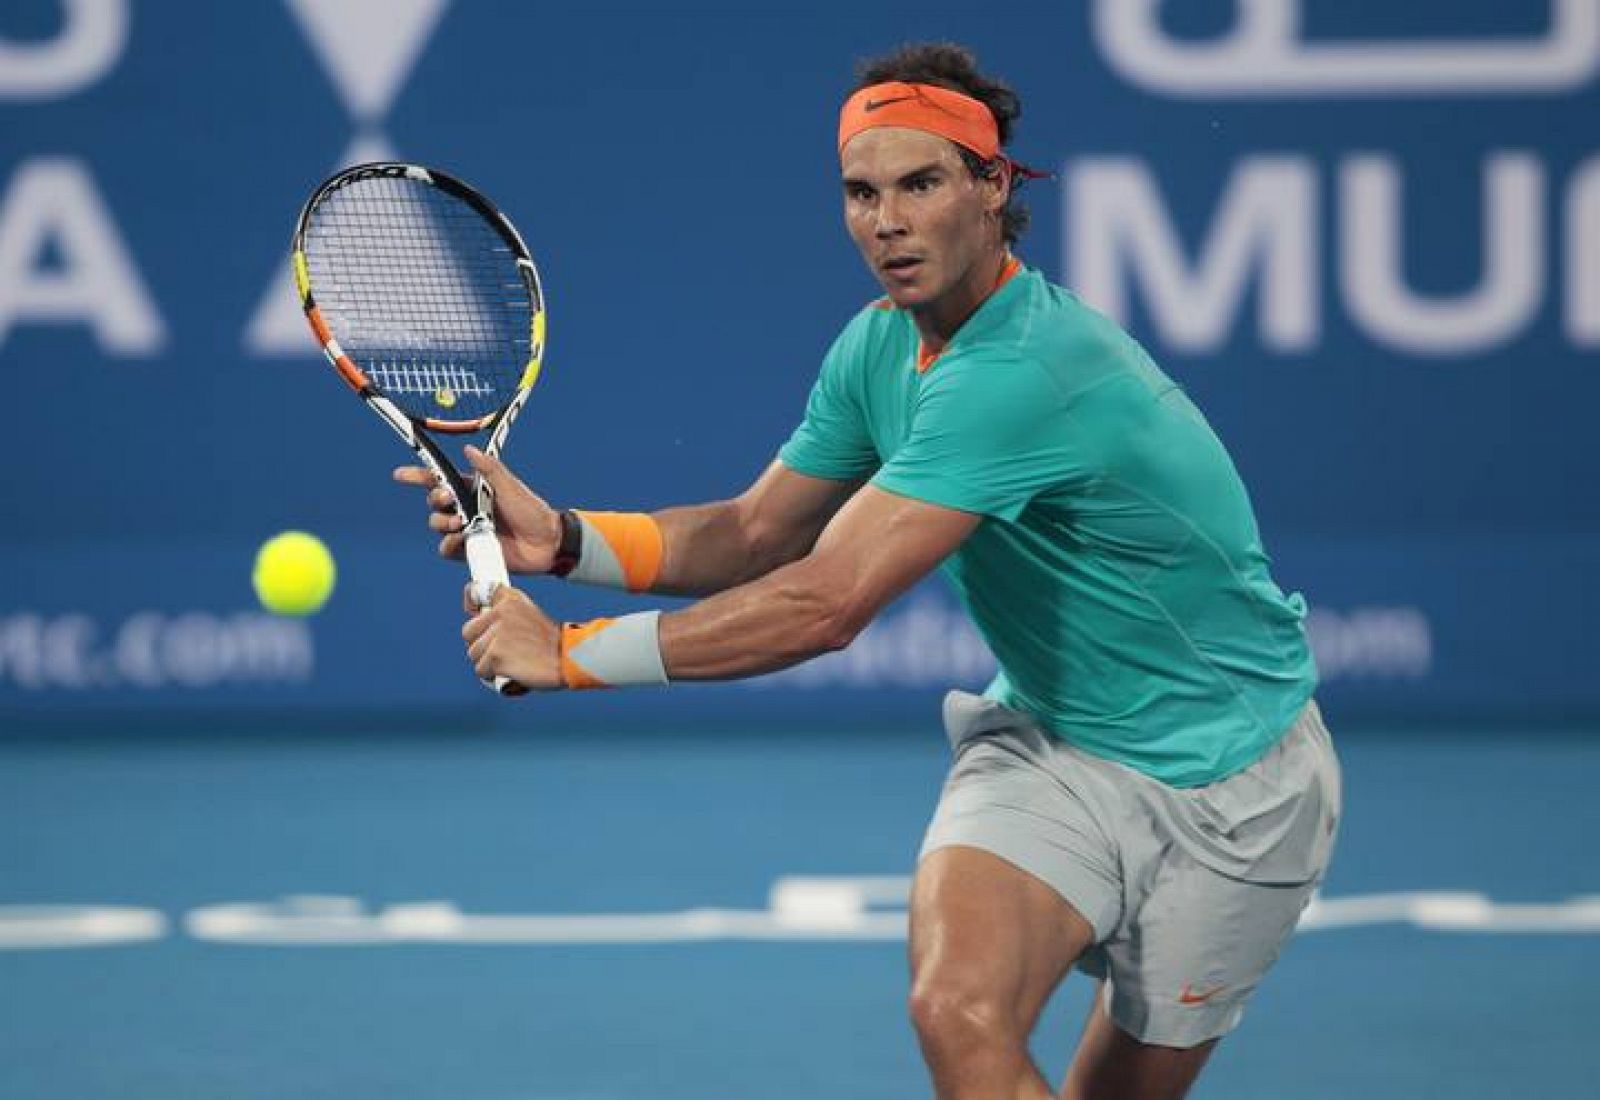 Tenis Torneo de Abu Dabi Rafa Nadal se impone a Wawrinka en la